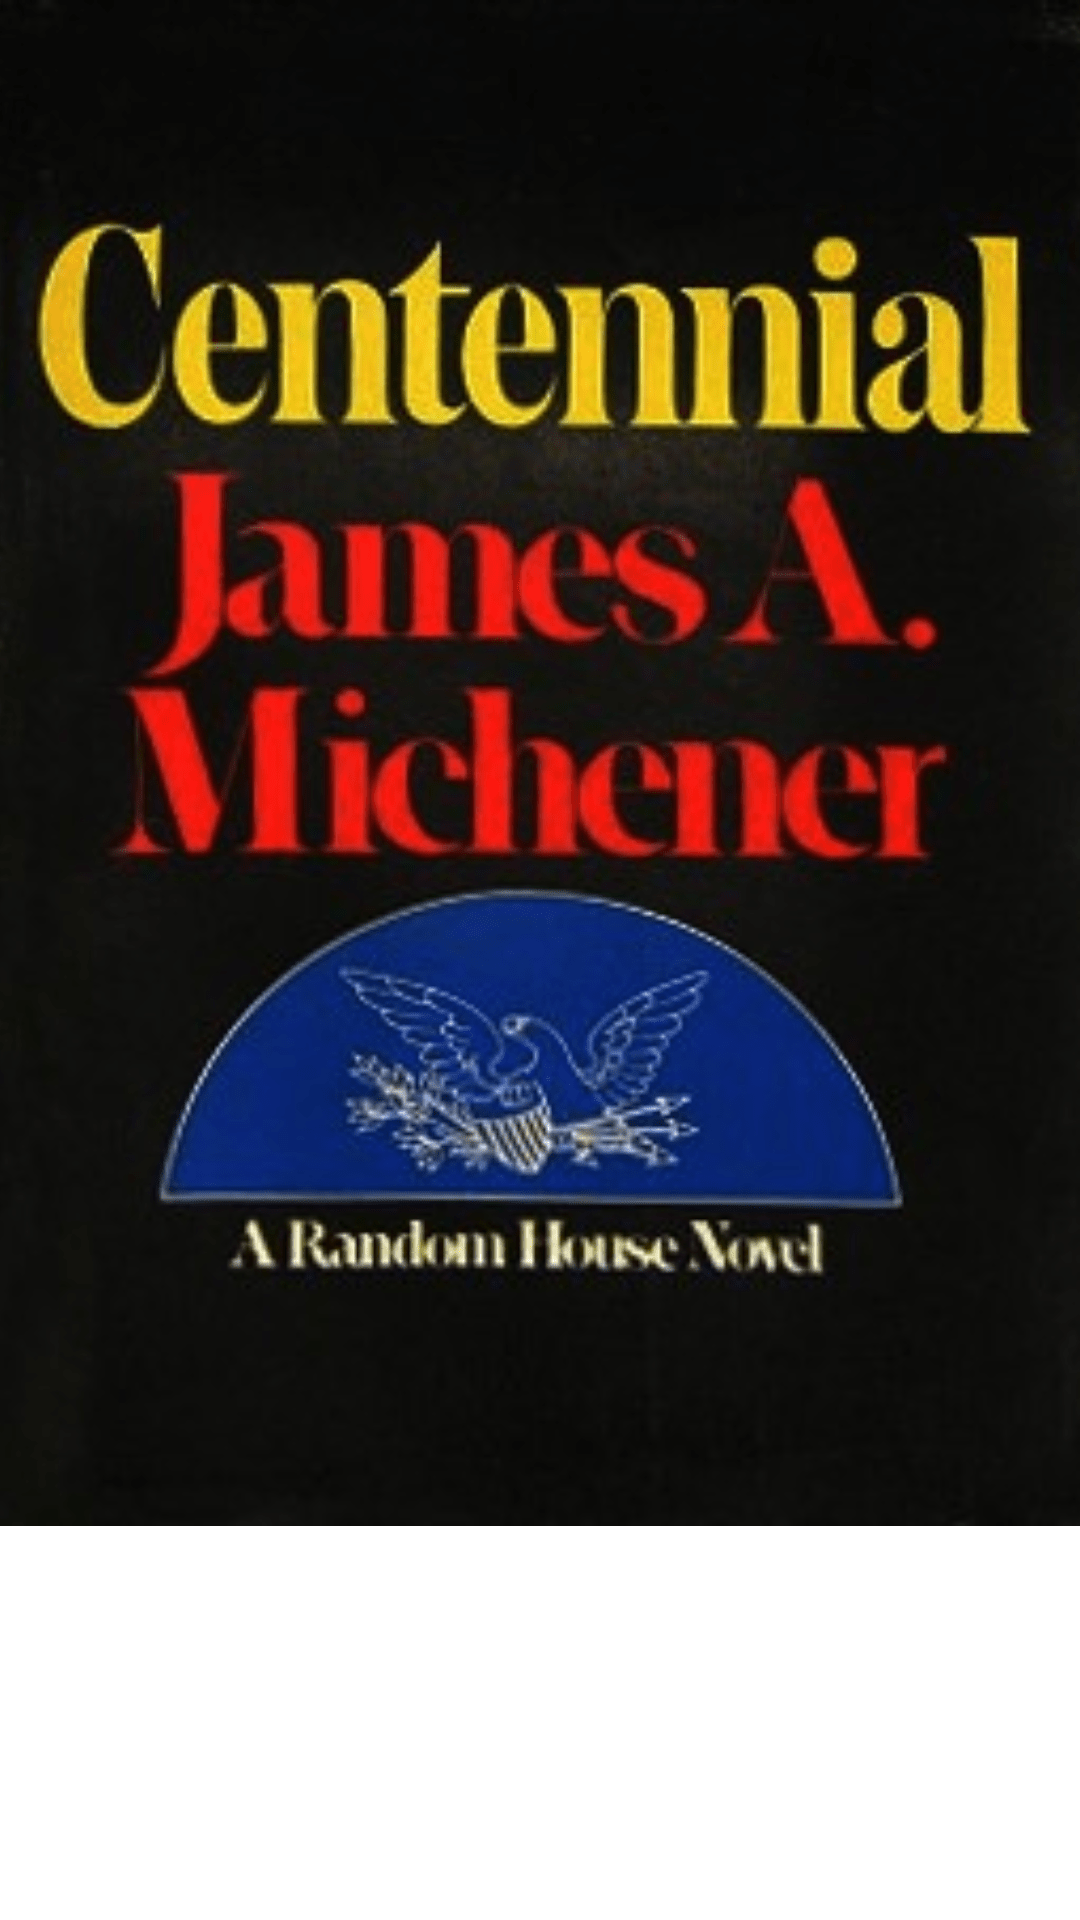 Centennial by James A. Michener